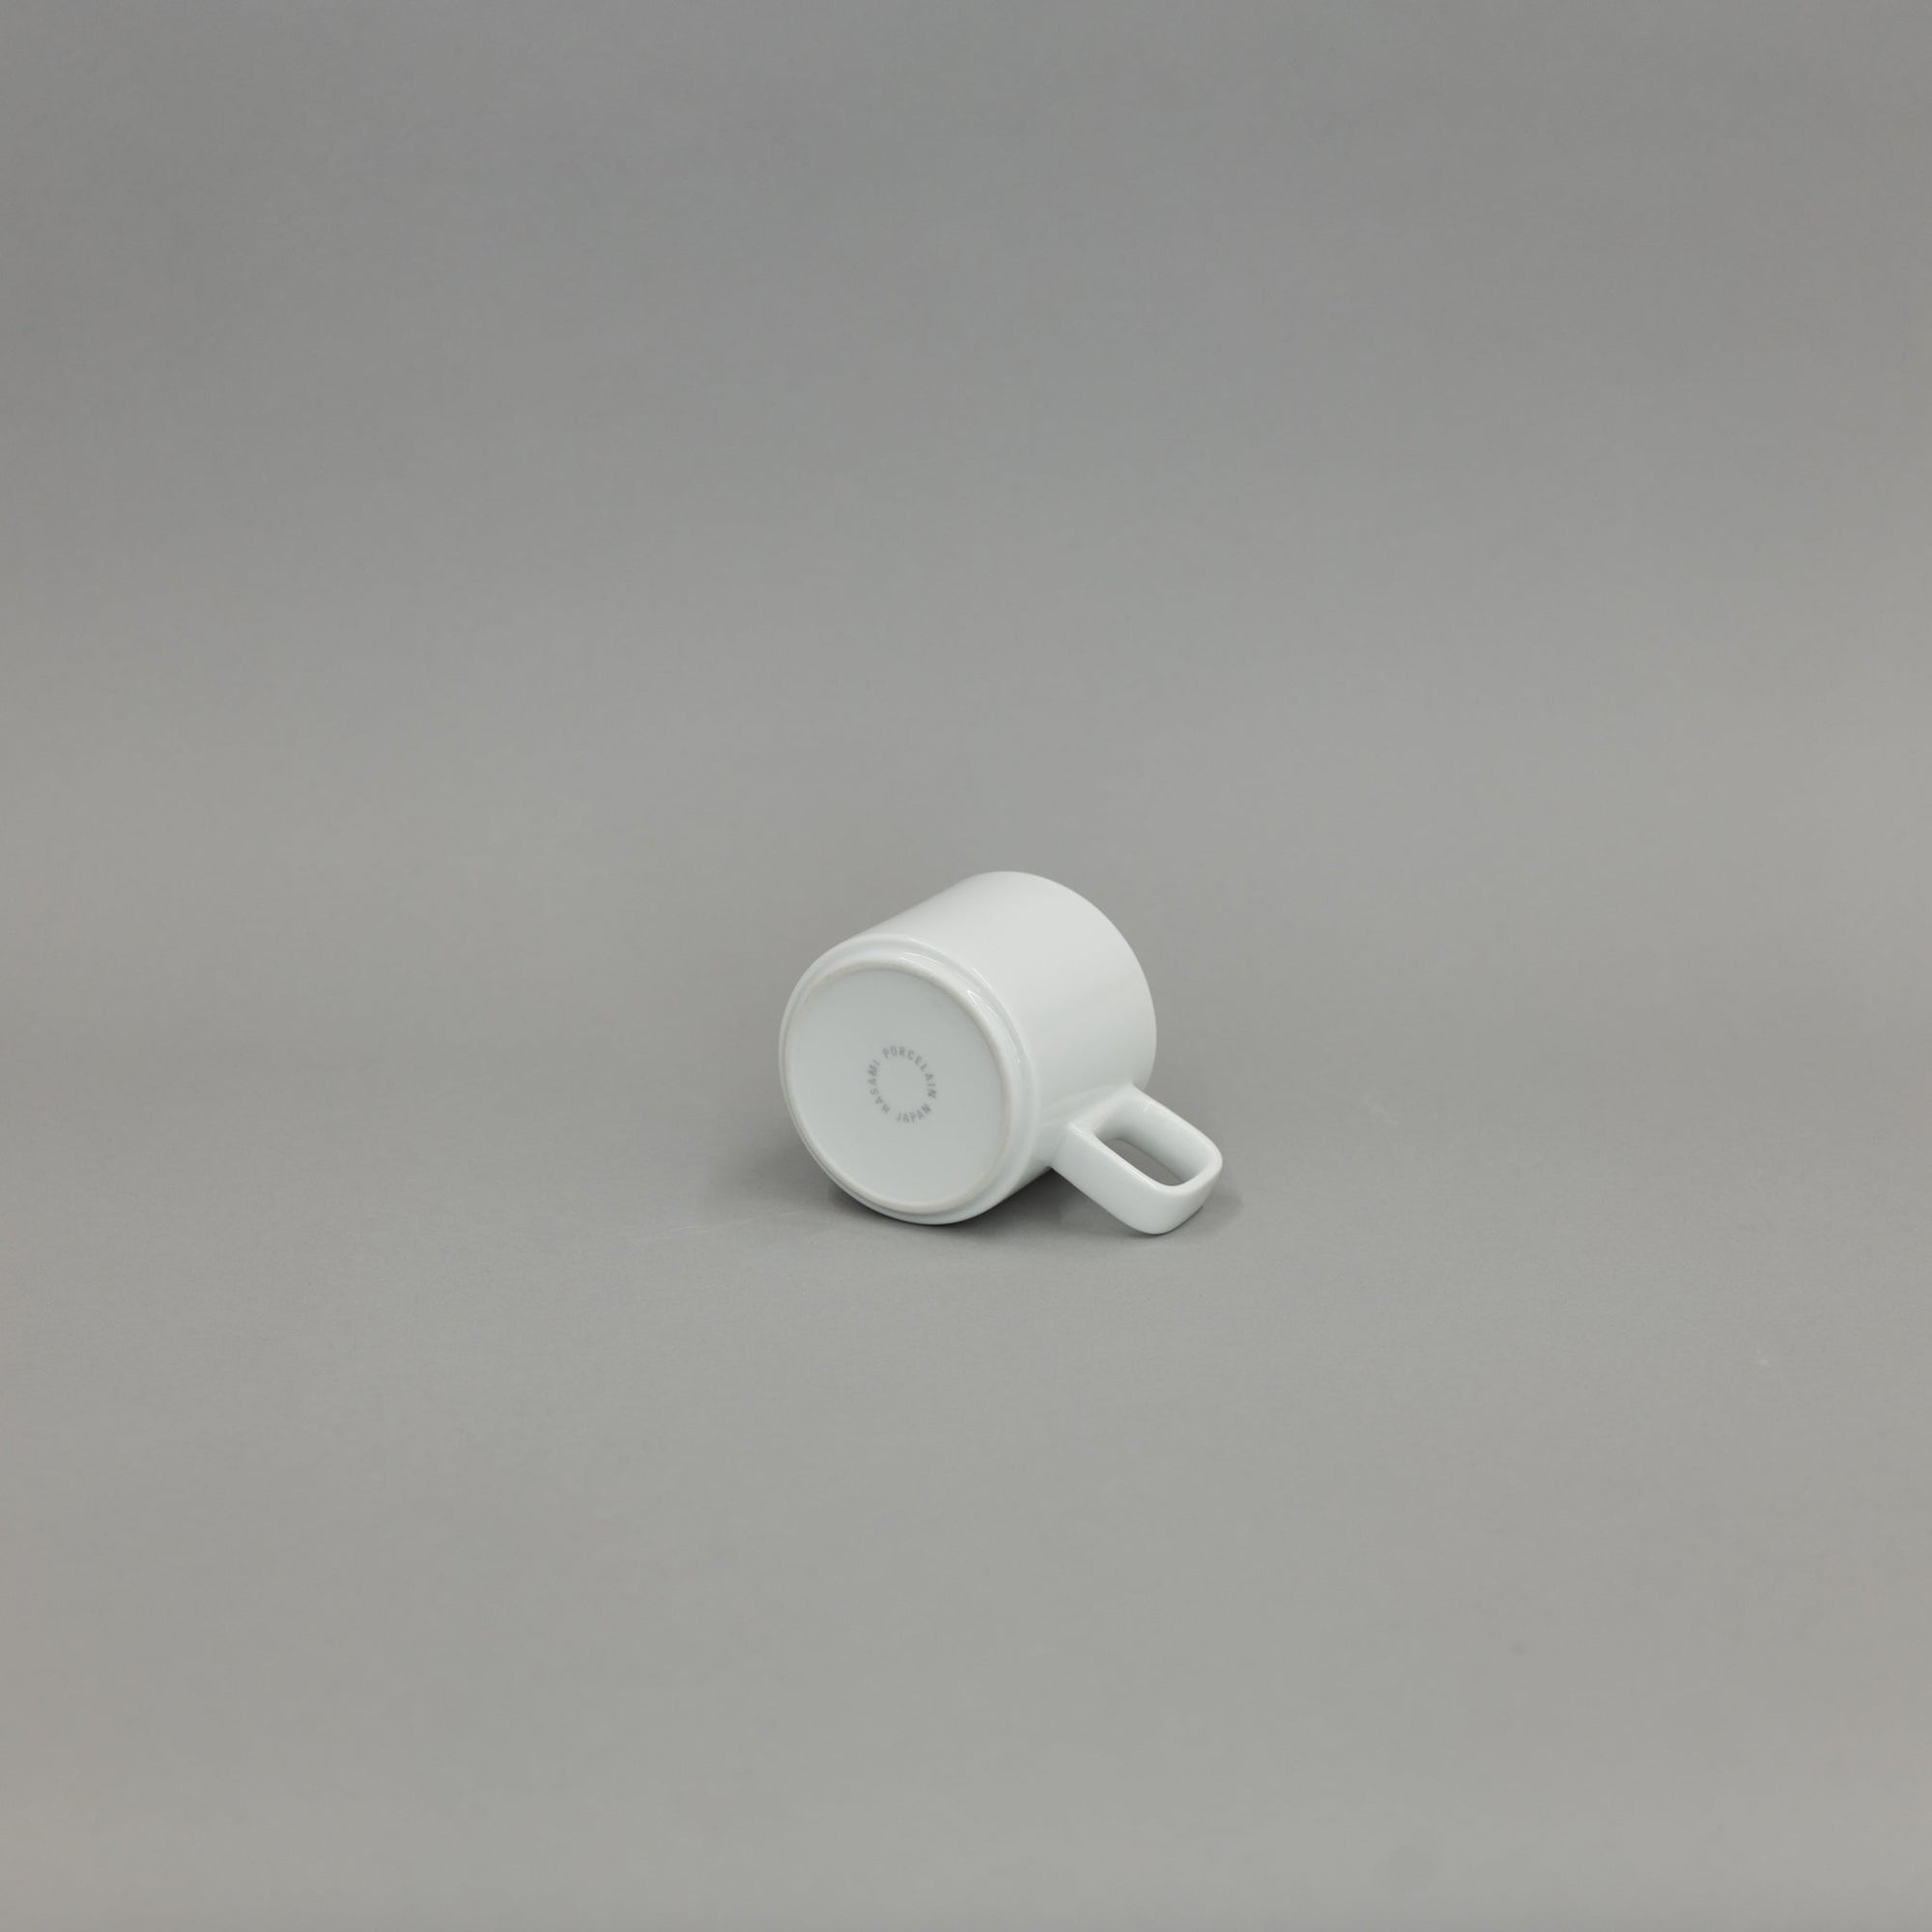 HPW019 - Mug Gloss White Small ø 3.3/8" | Tortoise General Store